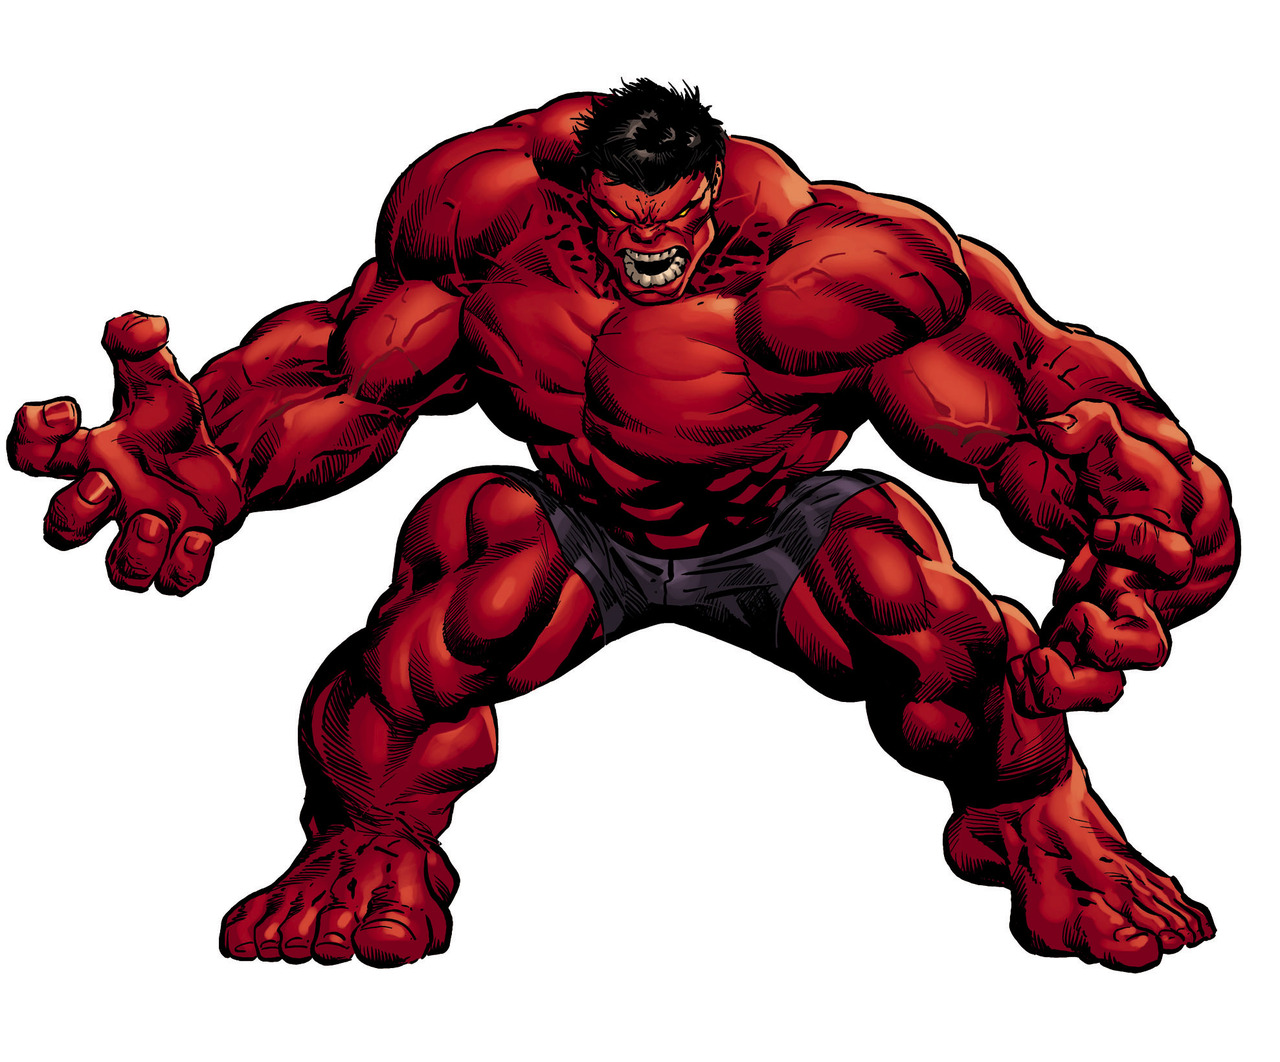 Red Hulk #4